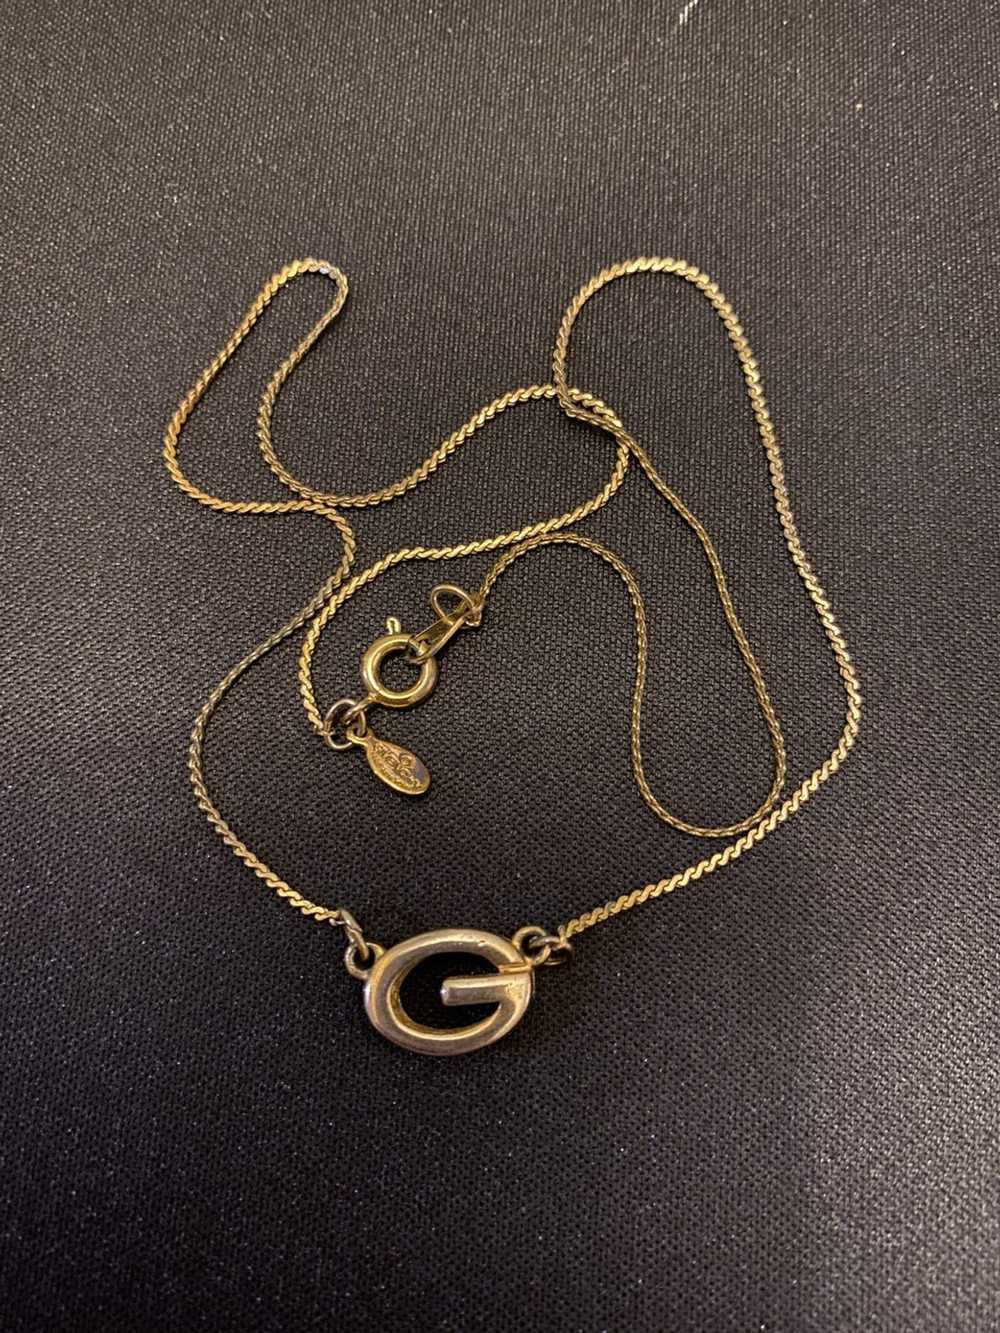 Givenchy Givenchy ‘G” Logo Necklace - image 1